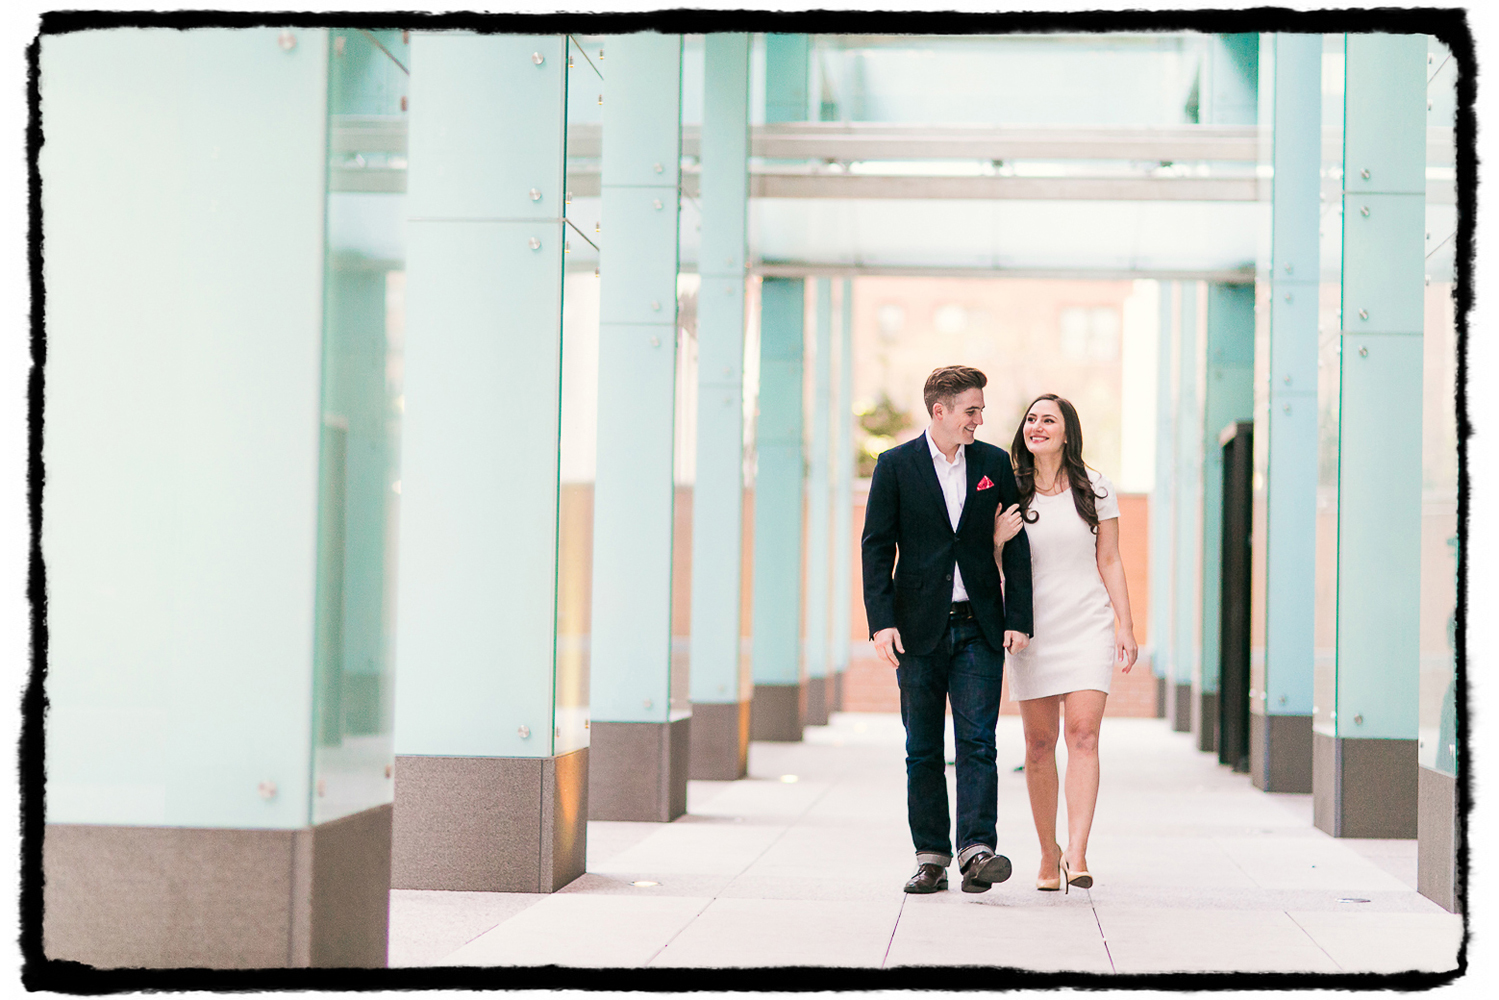 Engagement Portraits: Michelle & Dan take a walk near Washington Square Park.